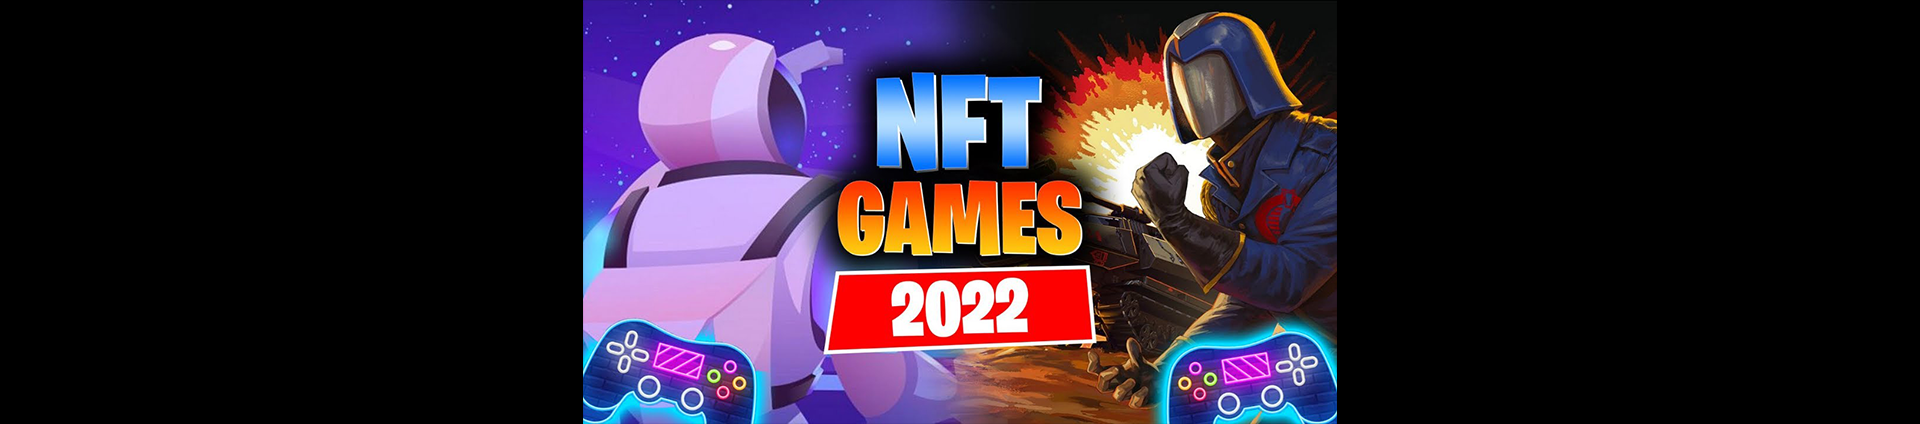 NFT Games in 2022